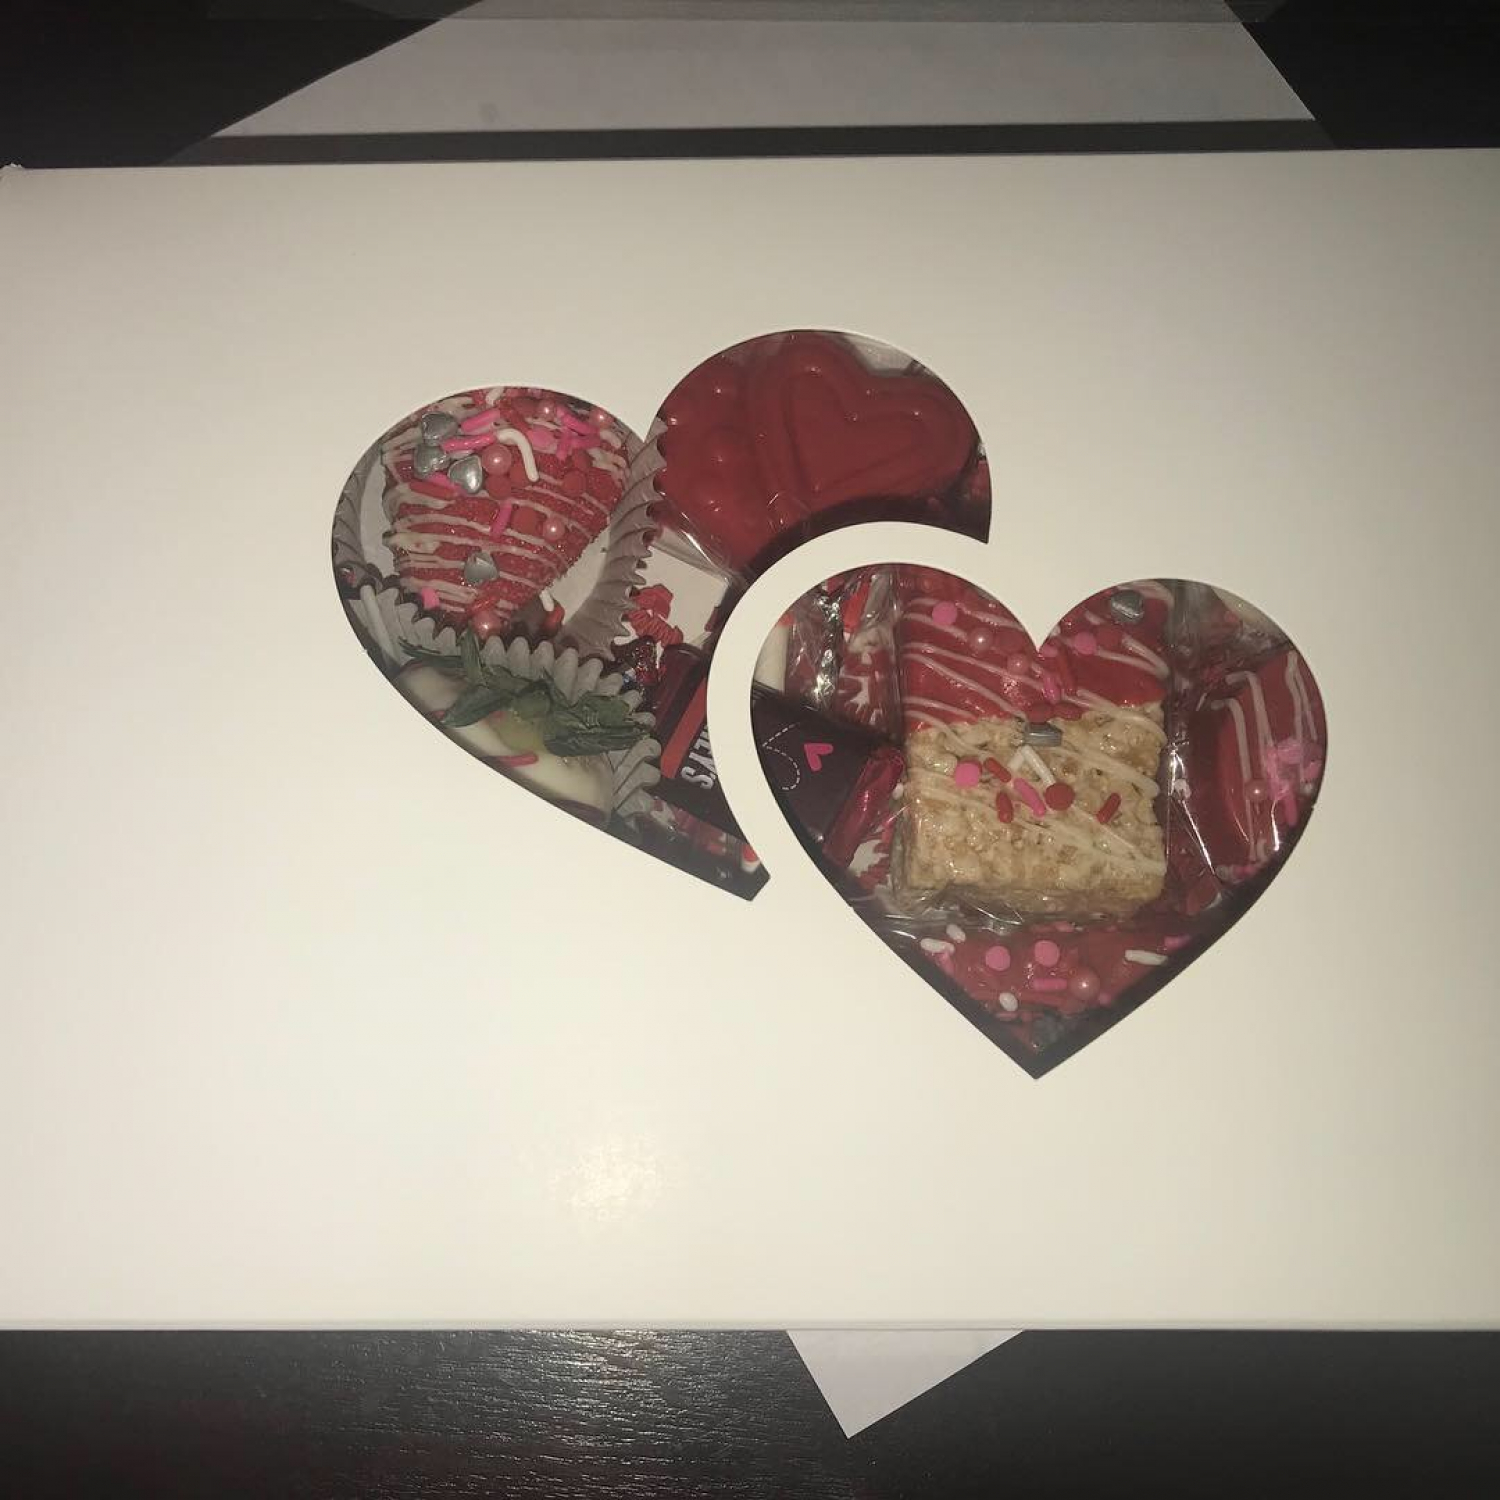 locked heart in a box